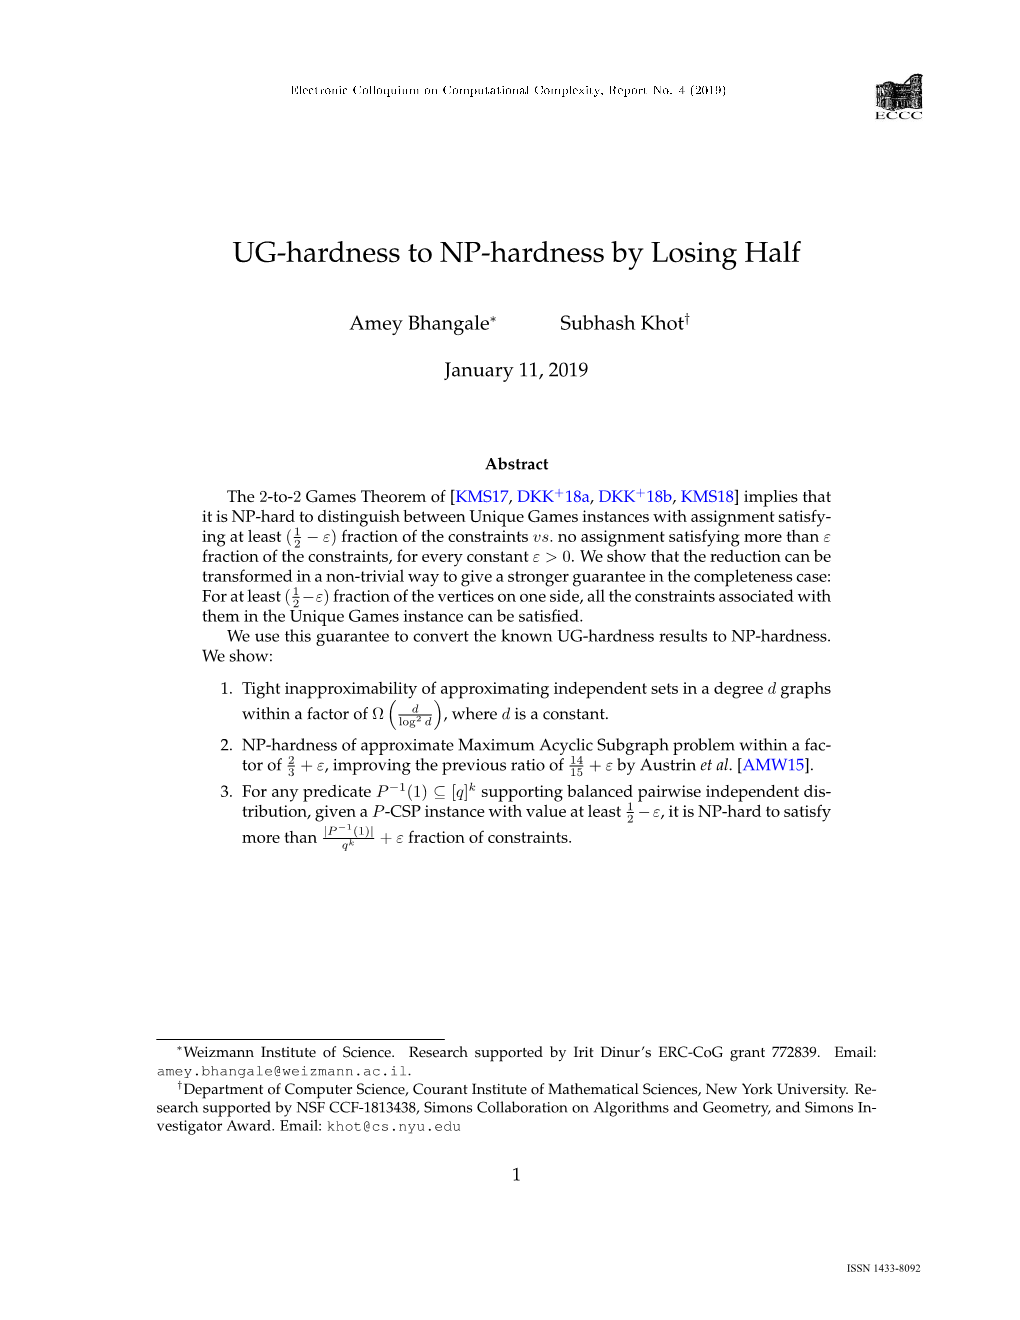 UG-Hardness to NP-Hardness by Losing Half